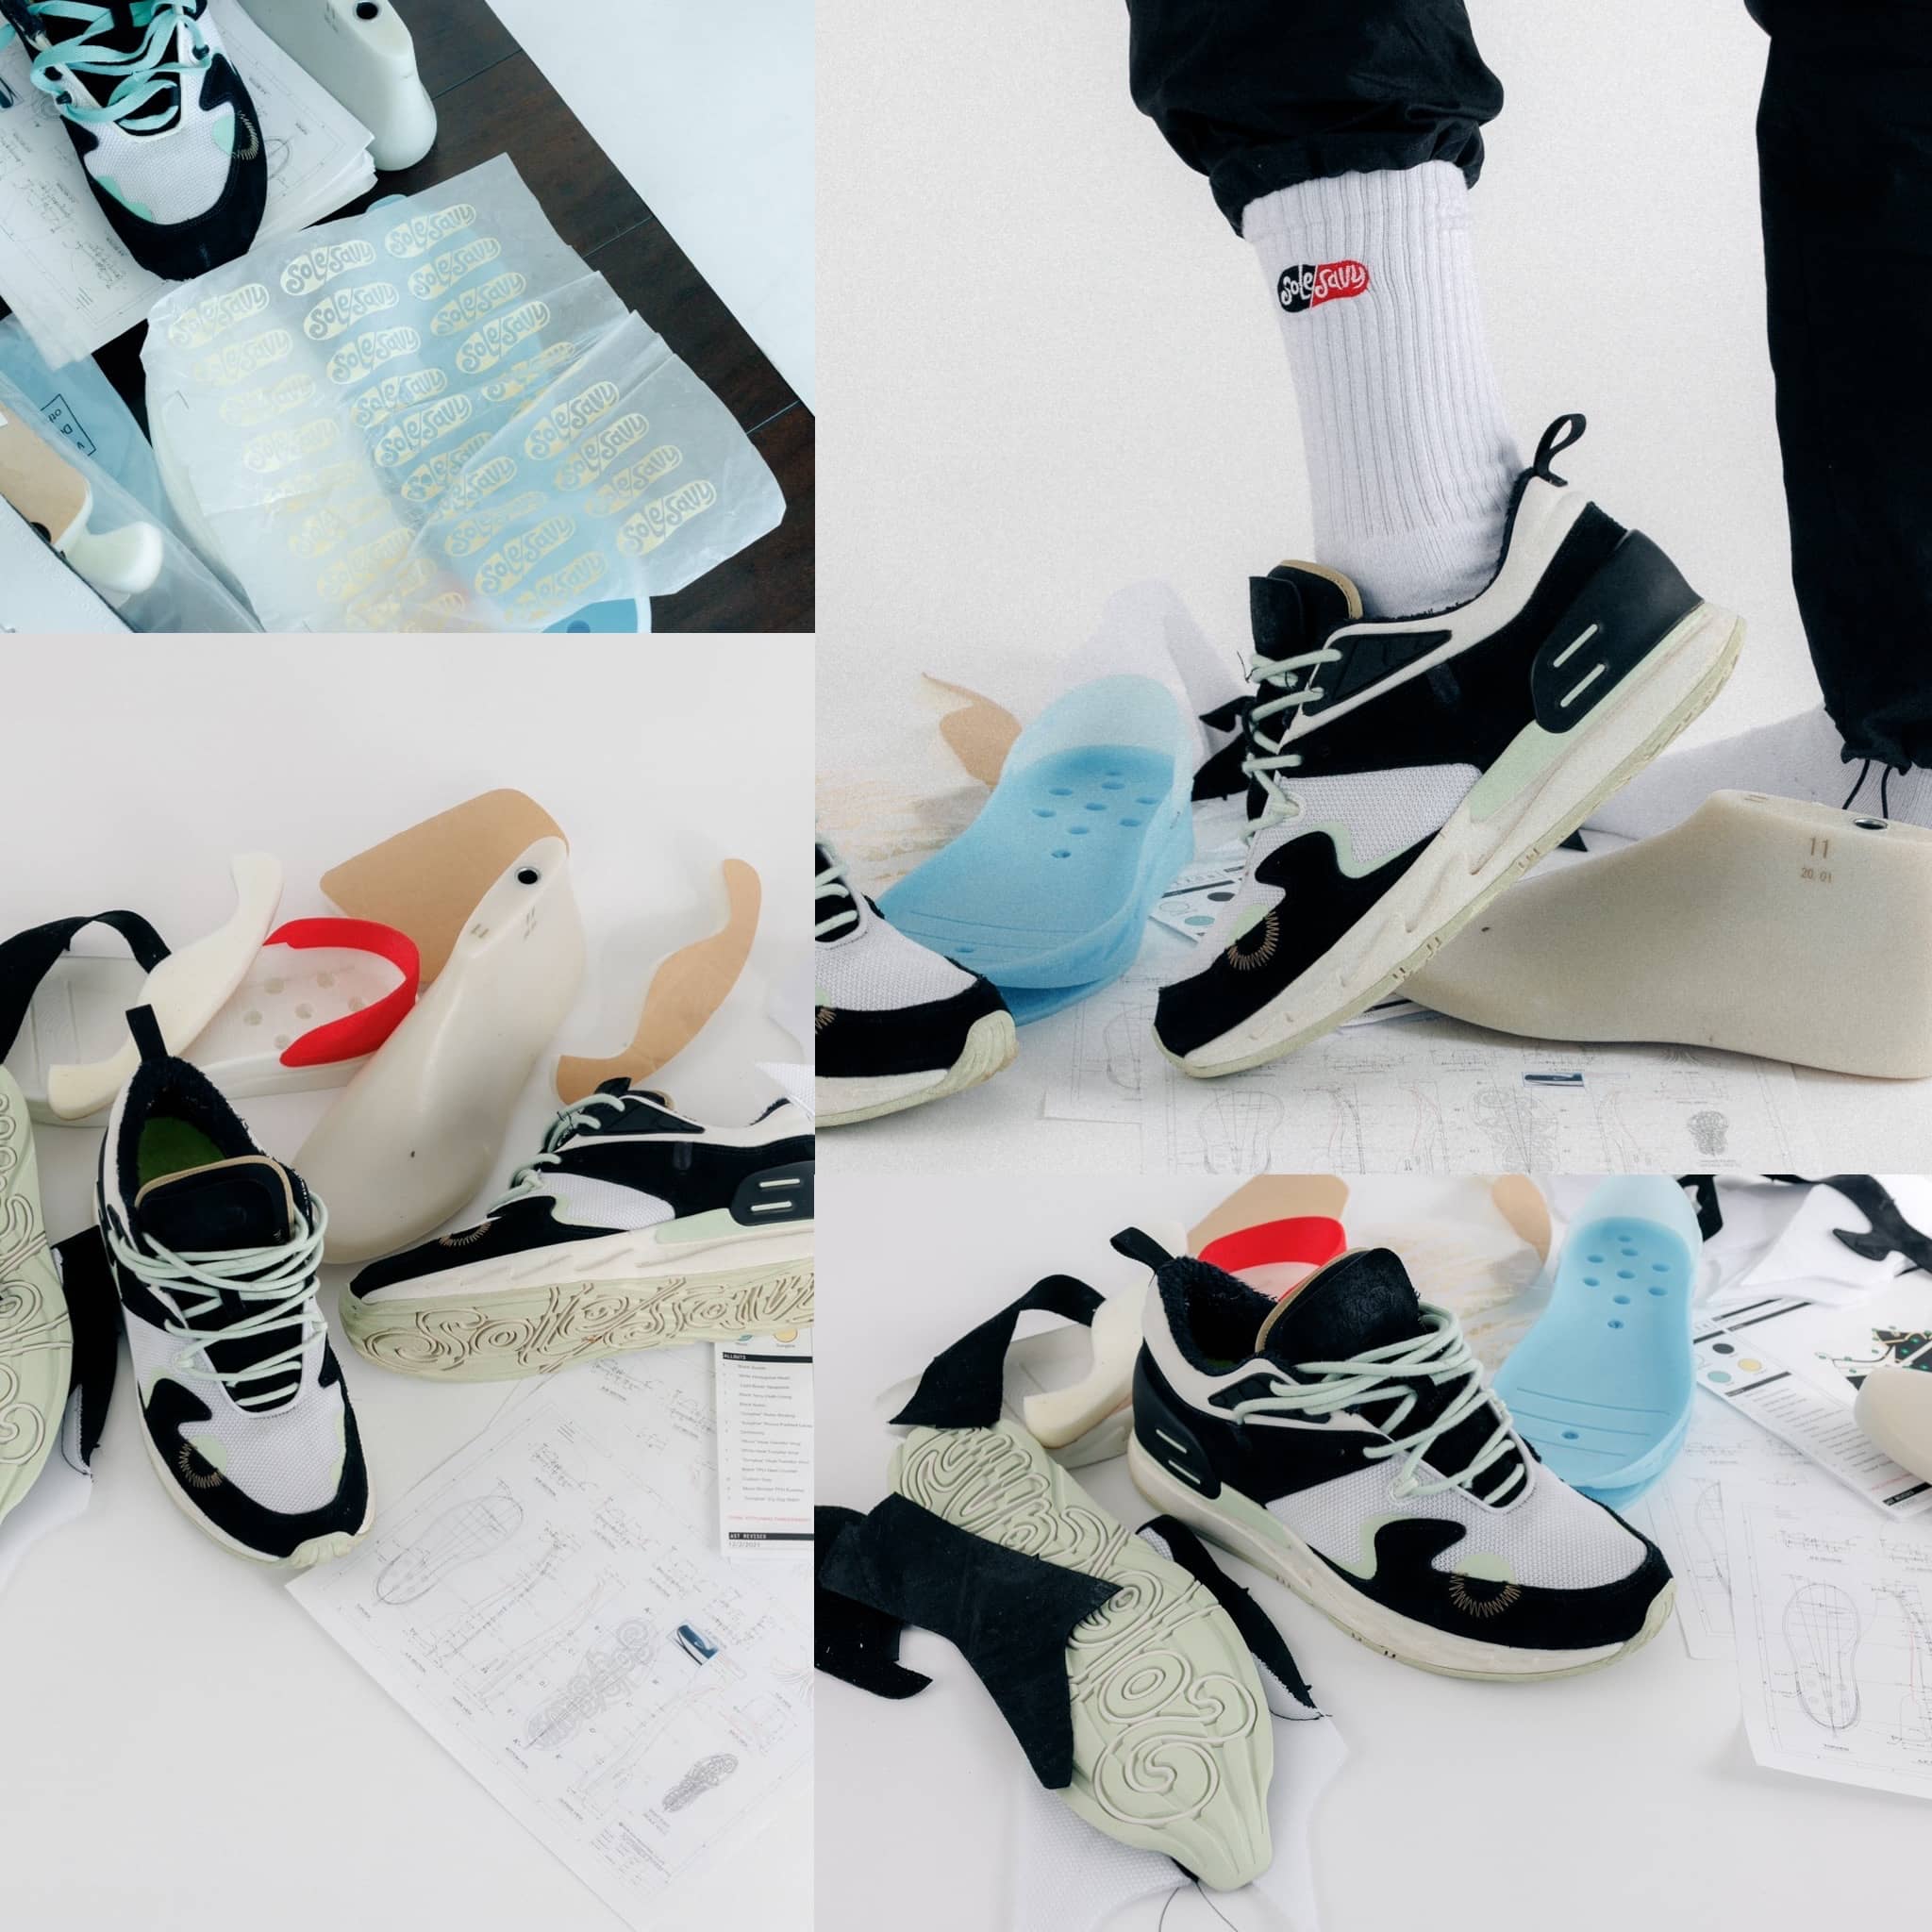 SoleSavy’s First Original Physical and Digital Sneaker